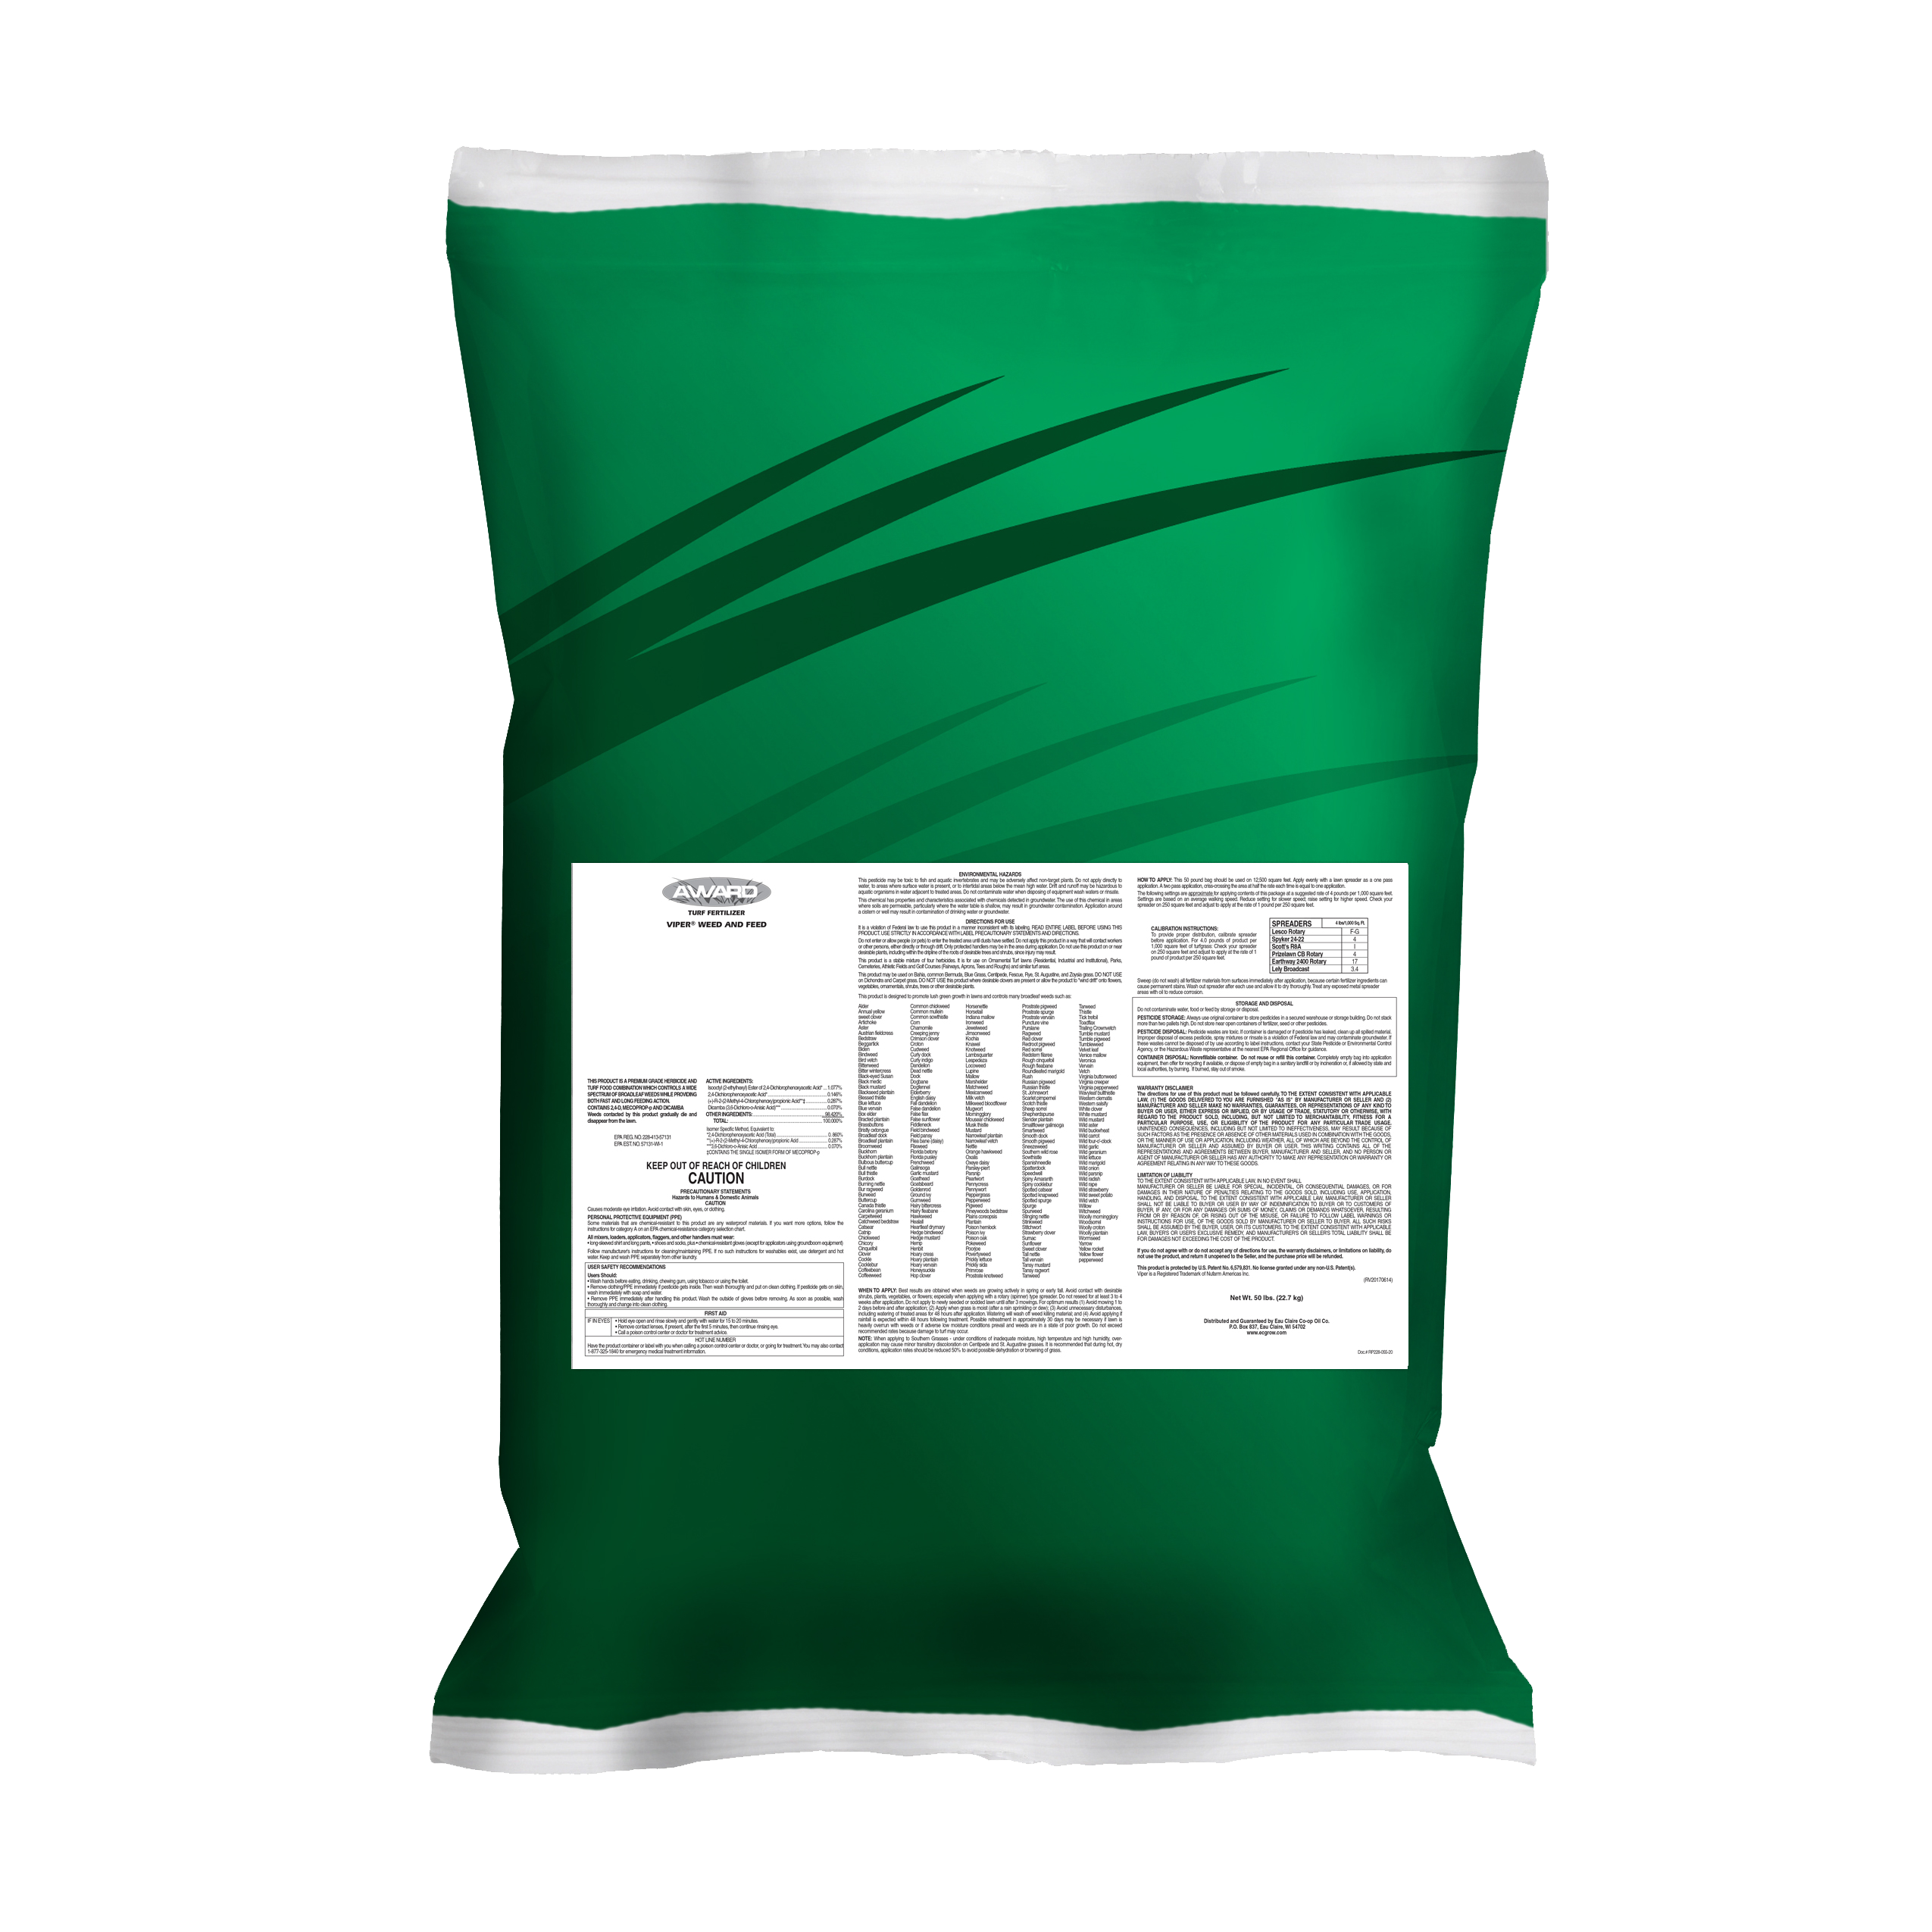 18-0-3 25% PCSCU with Viper 50 lb Bag - Fertilizer